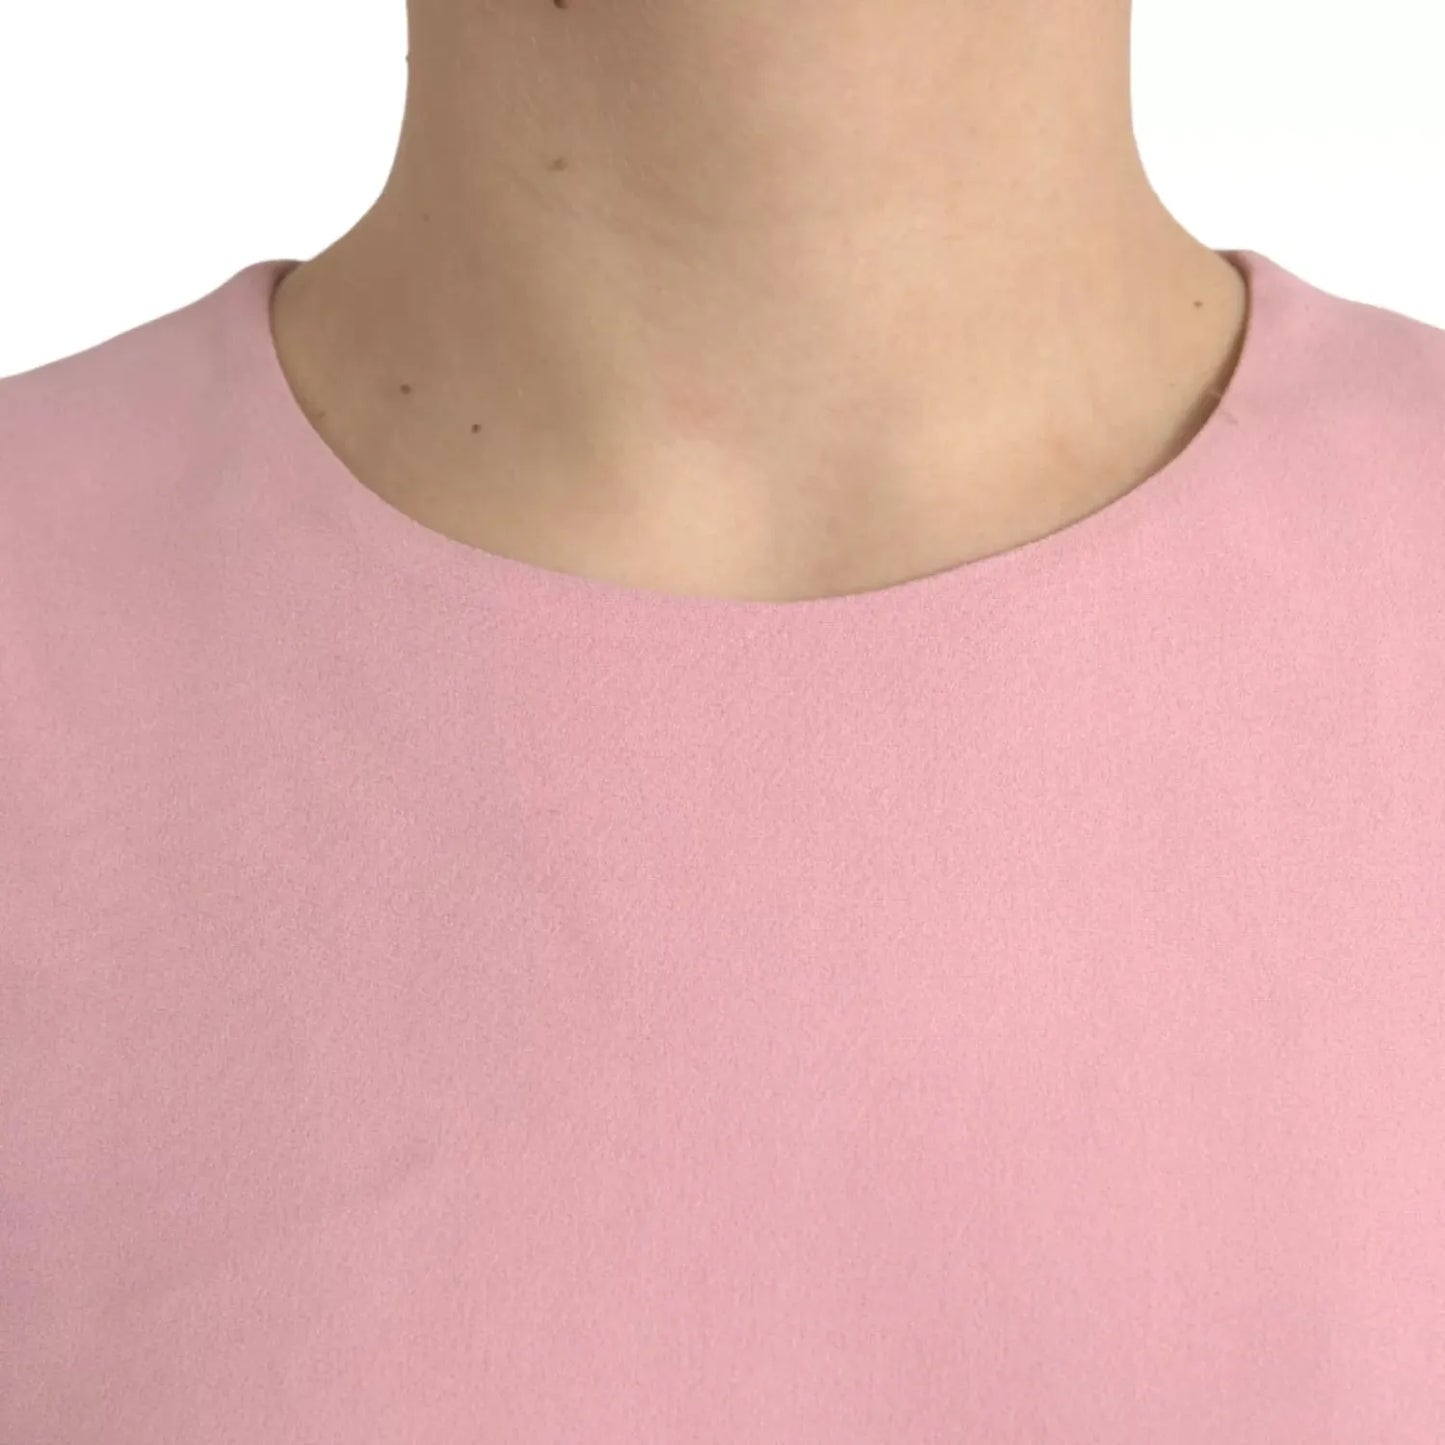 Pink A-line Flare Viscose Short Sleeves Dress